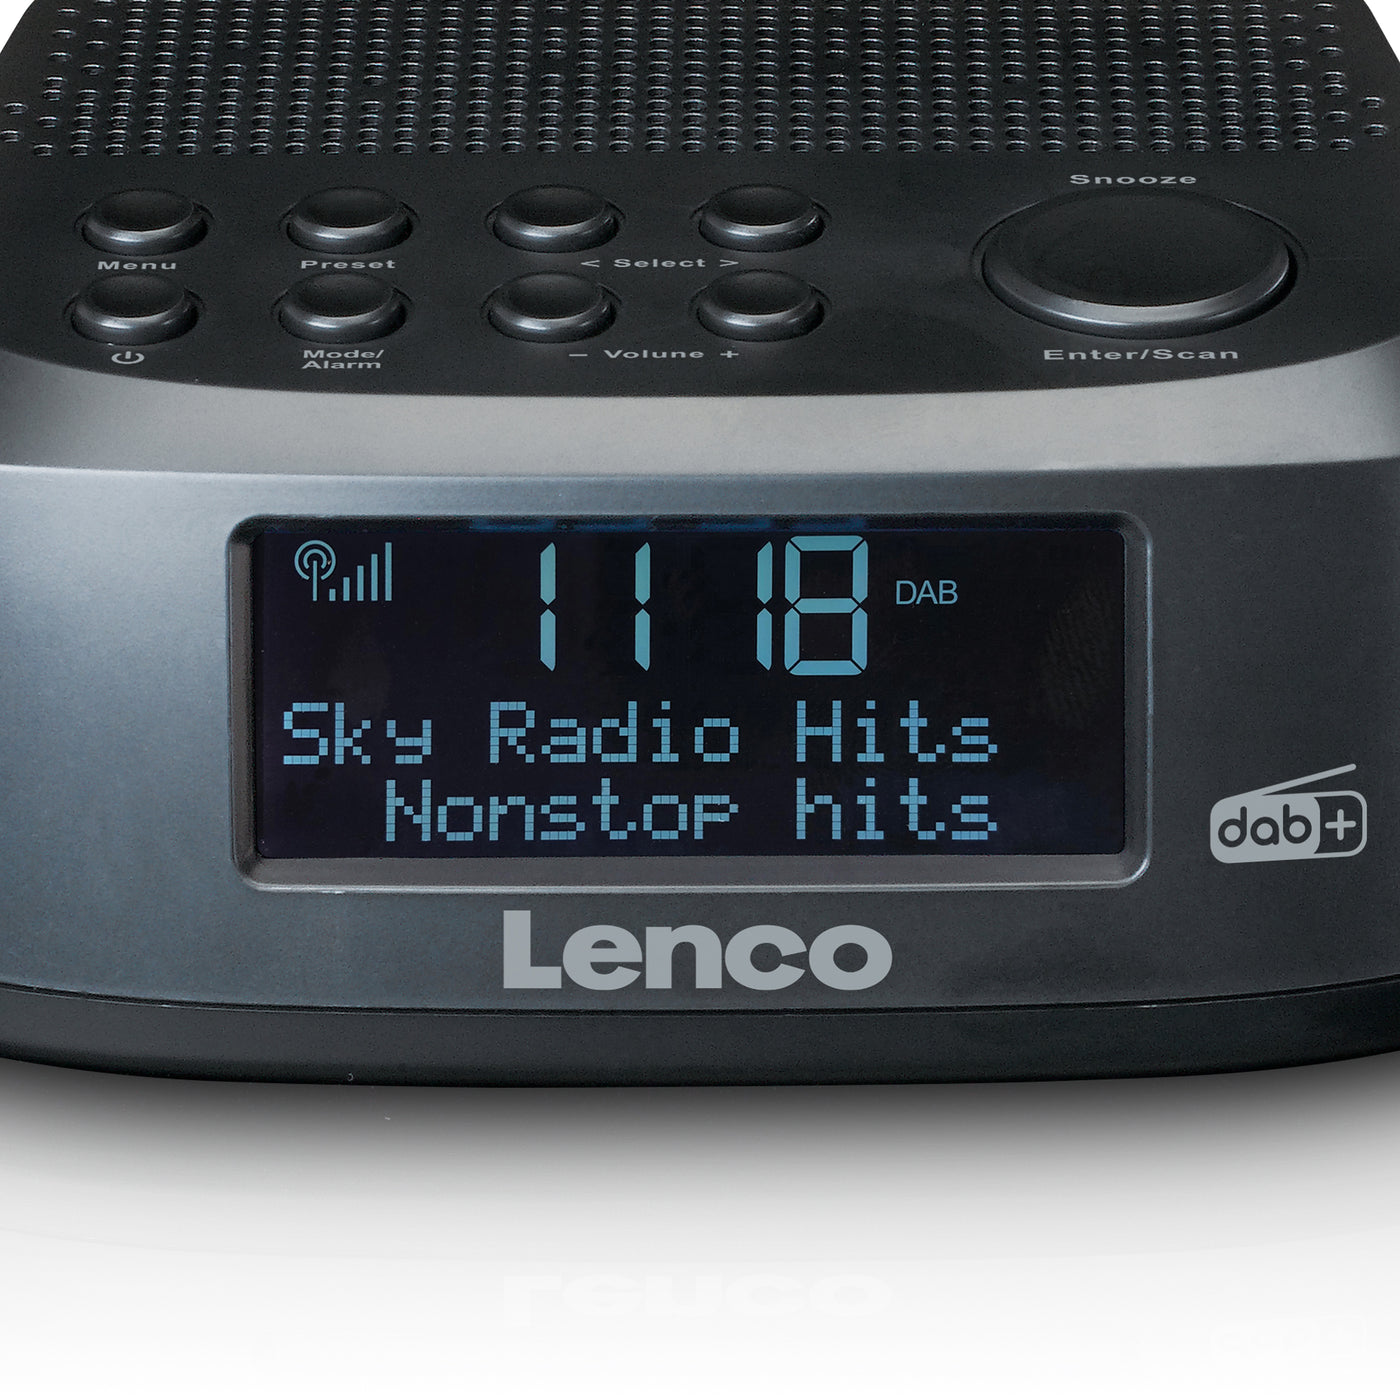 LENCO CR-605BK - Alarm clock with DAB+ and FM - Black